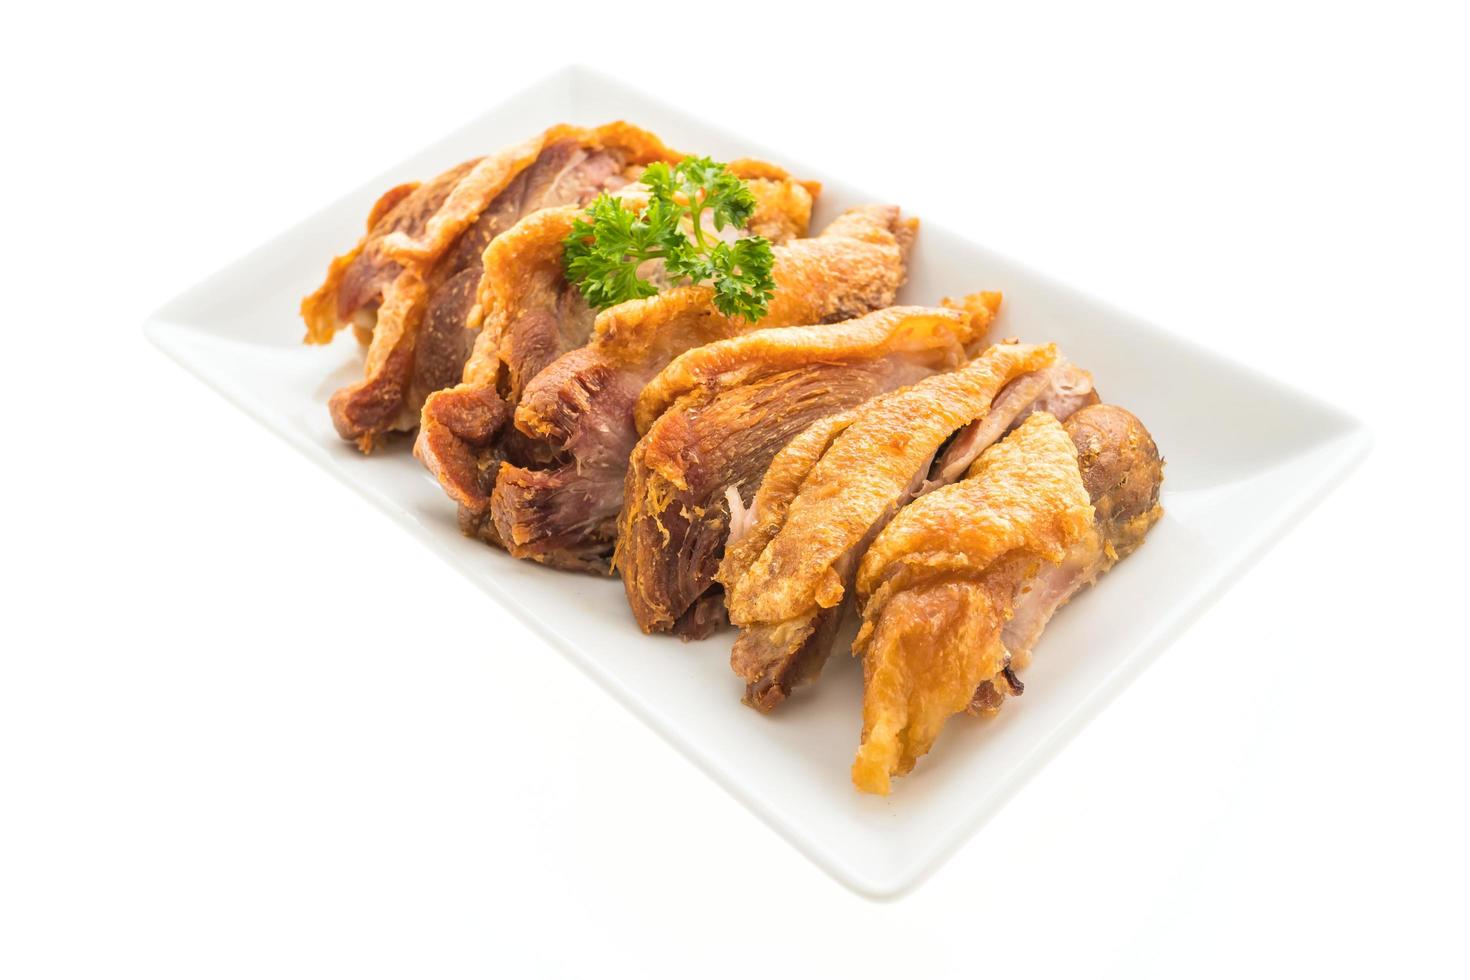 Fried crispy pork on white plate photo